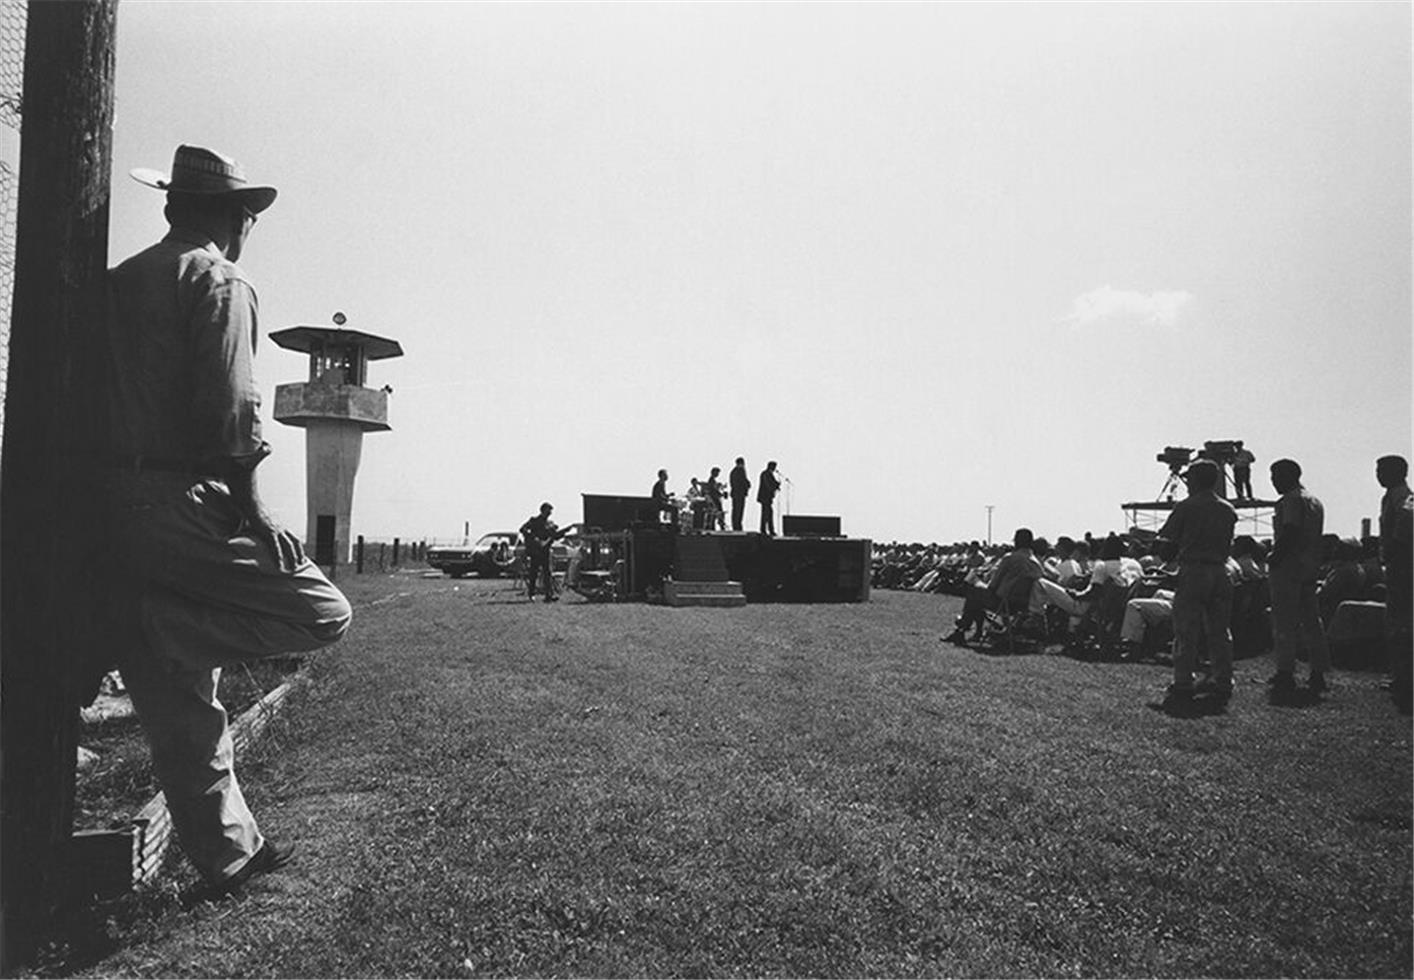 Al Clayton Black and White Photograph - Johnny Cash at Cummins prison, 1969